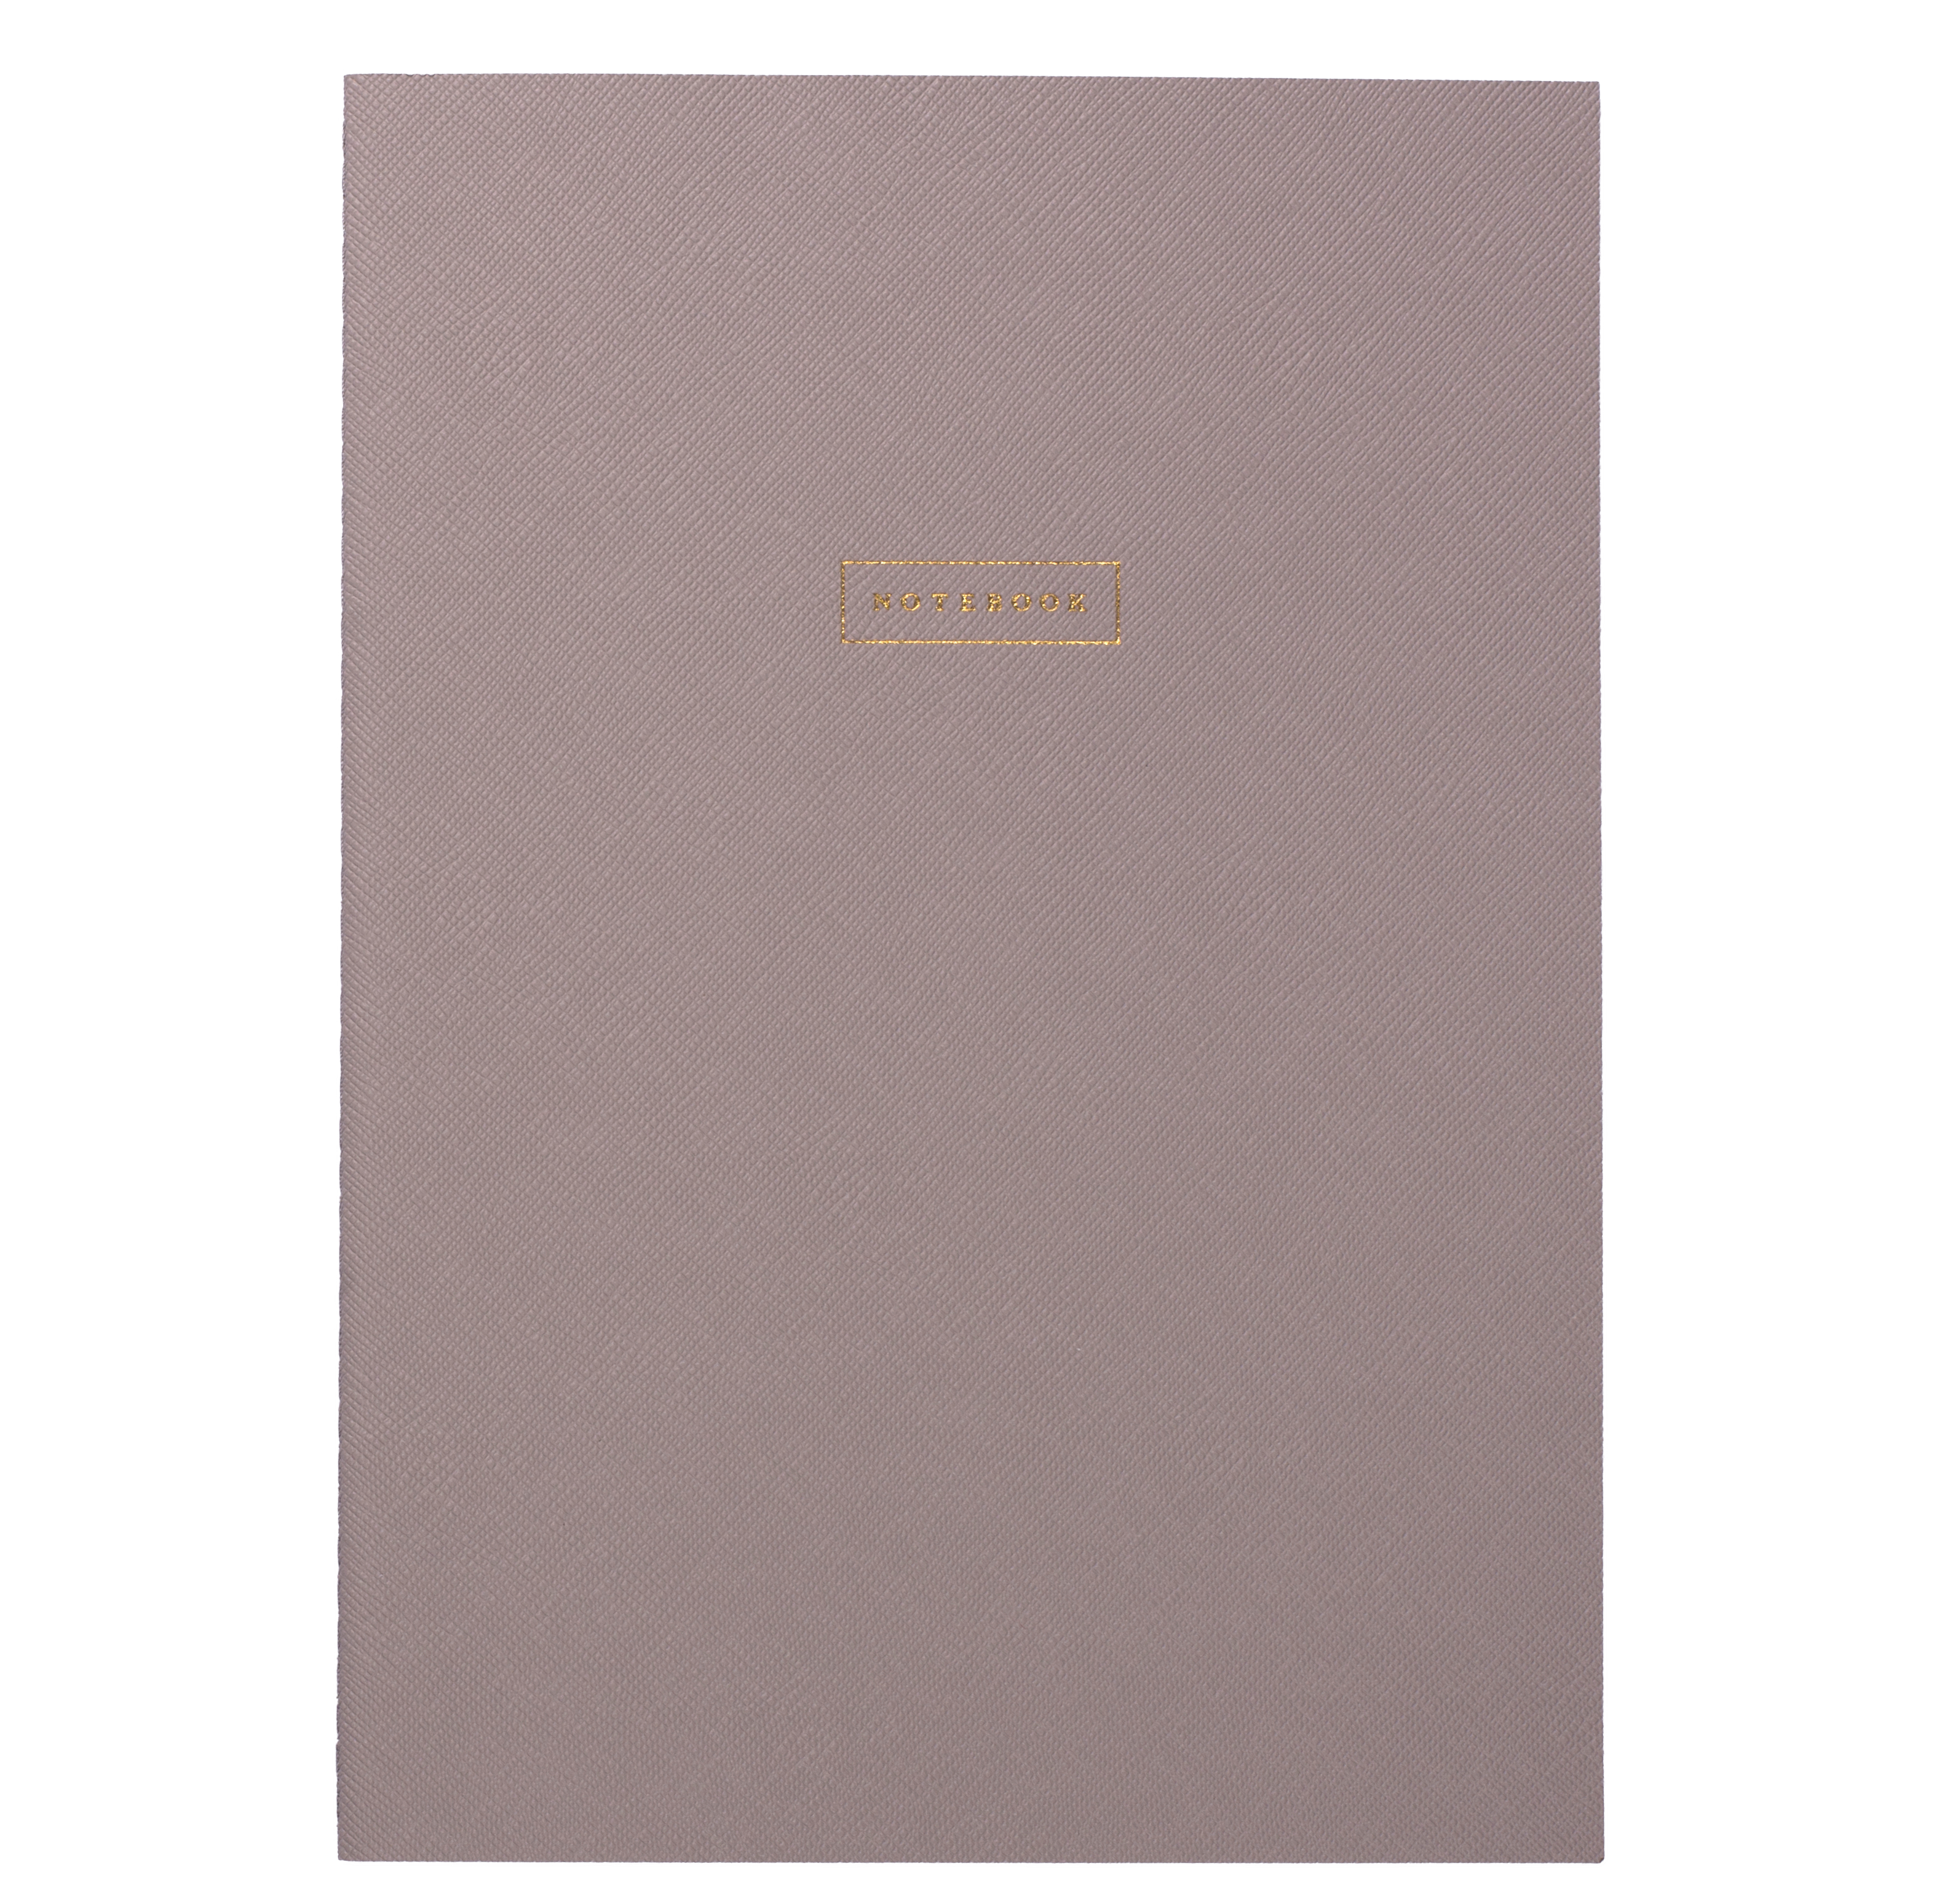 Singapore - B5 Ruled Notebook Tan